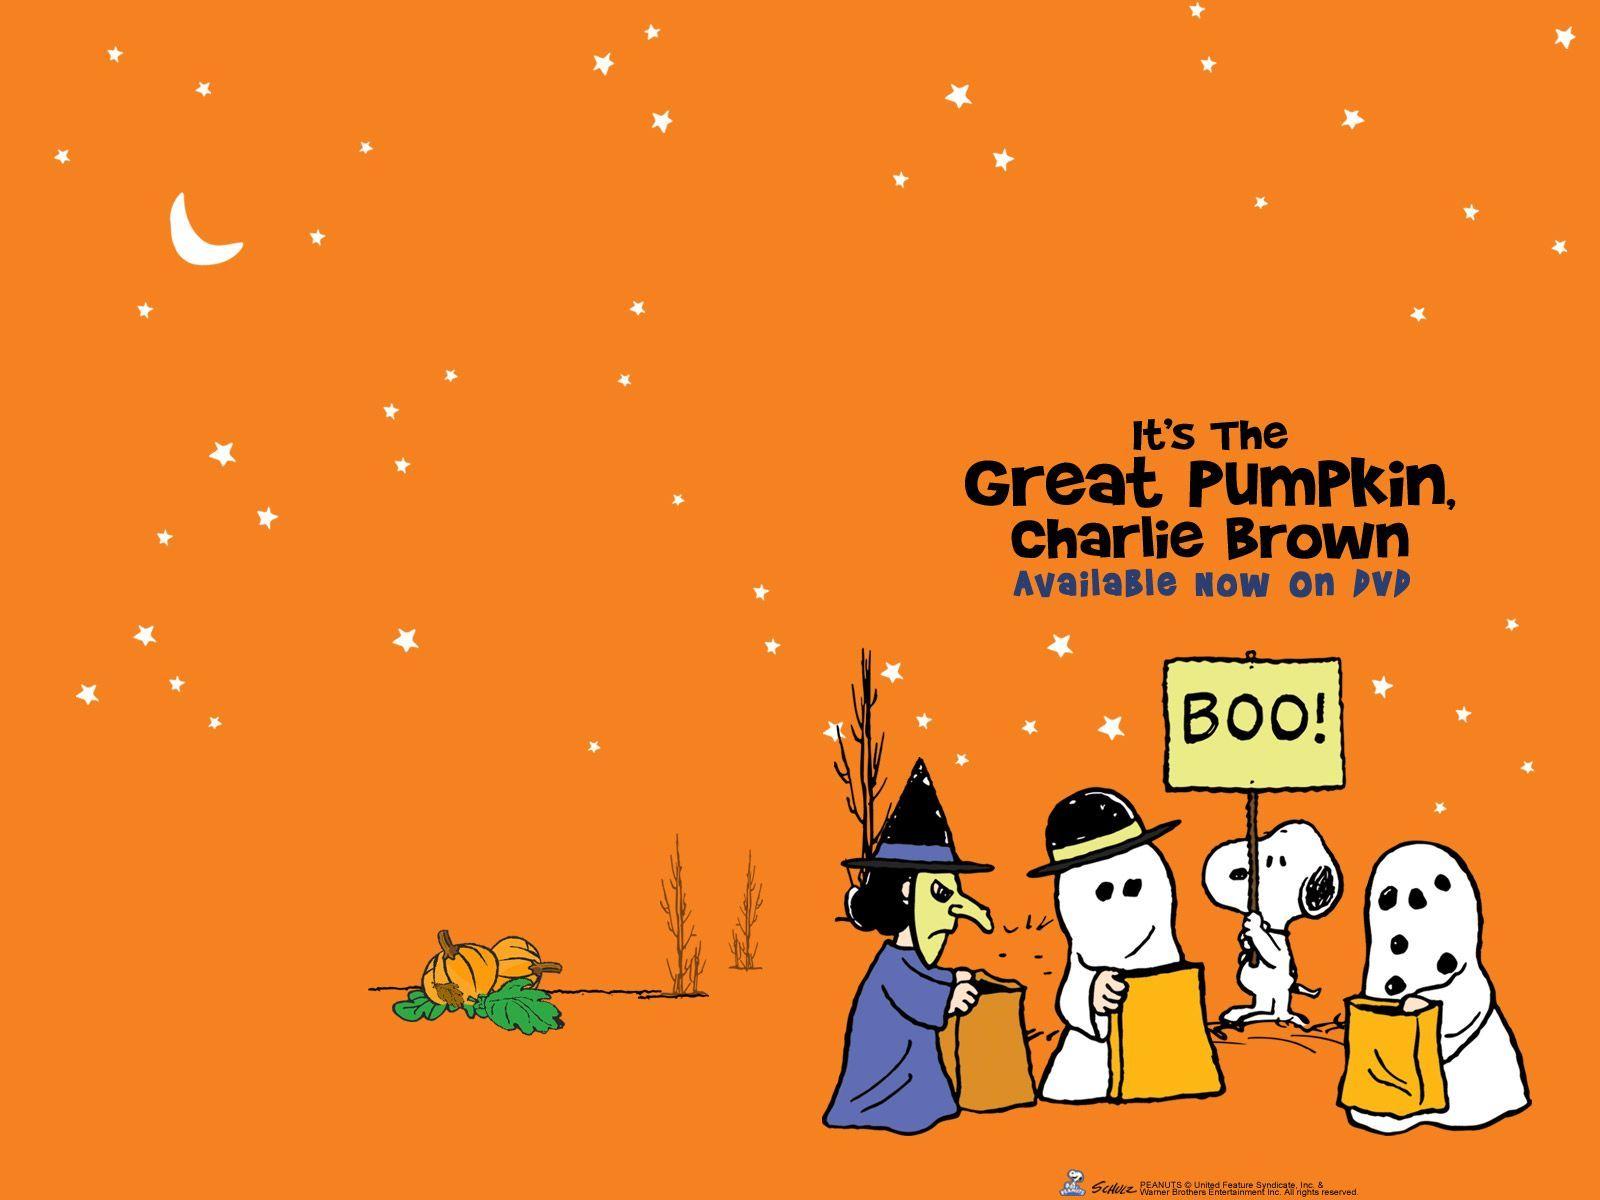 Great Pumpkin Charlie Brown Wallpaper